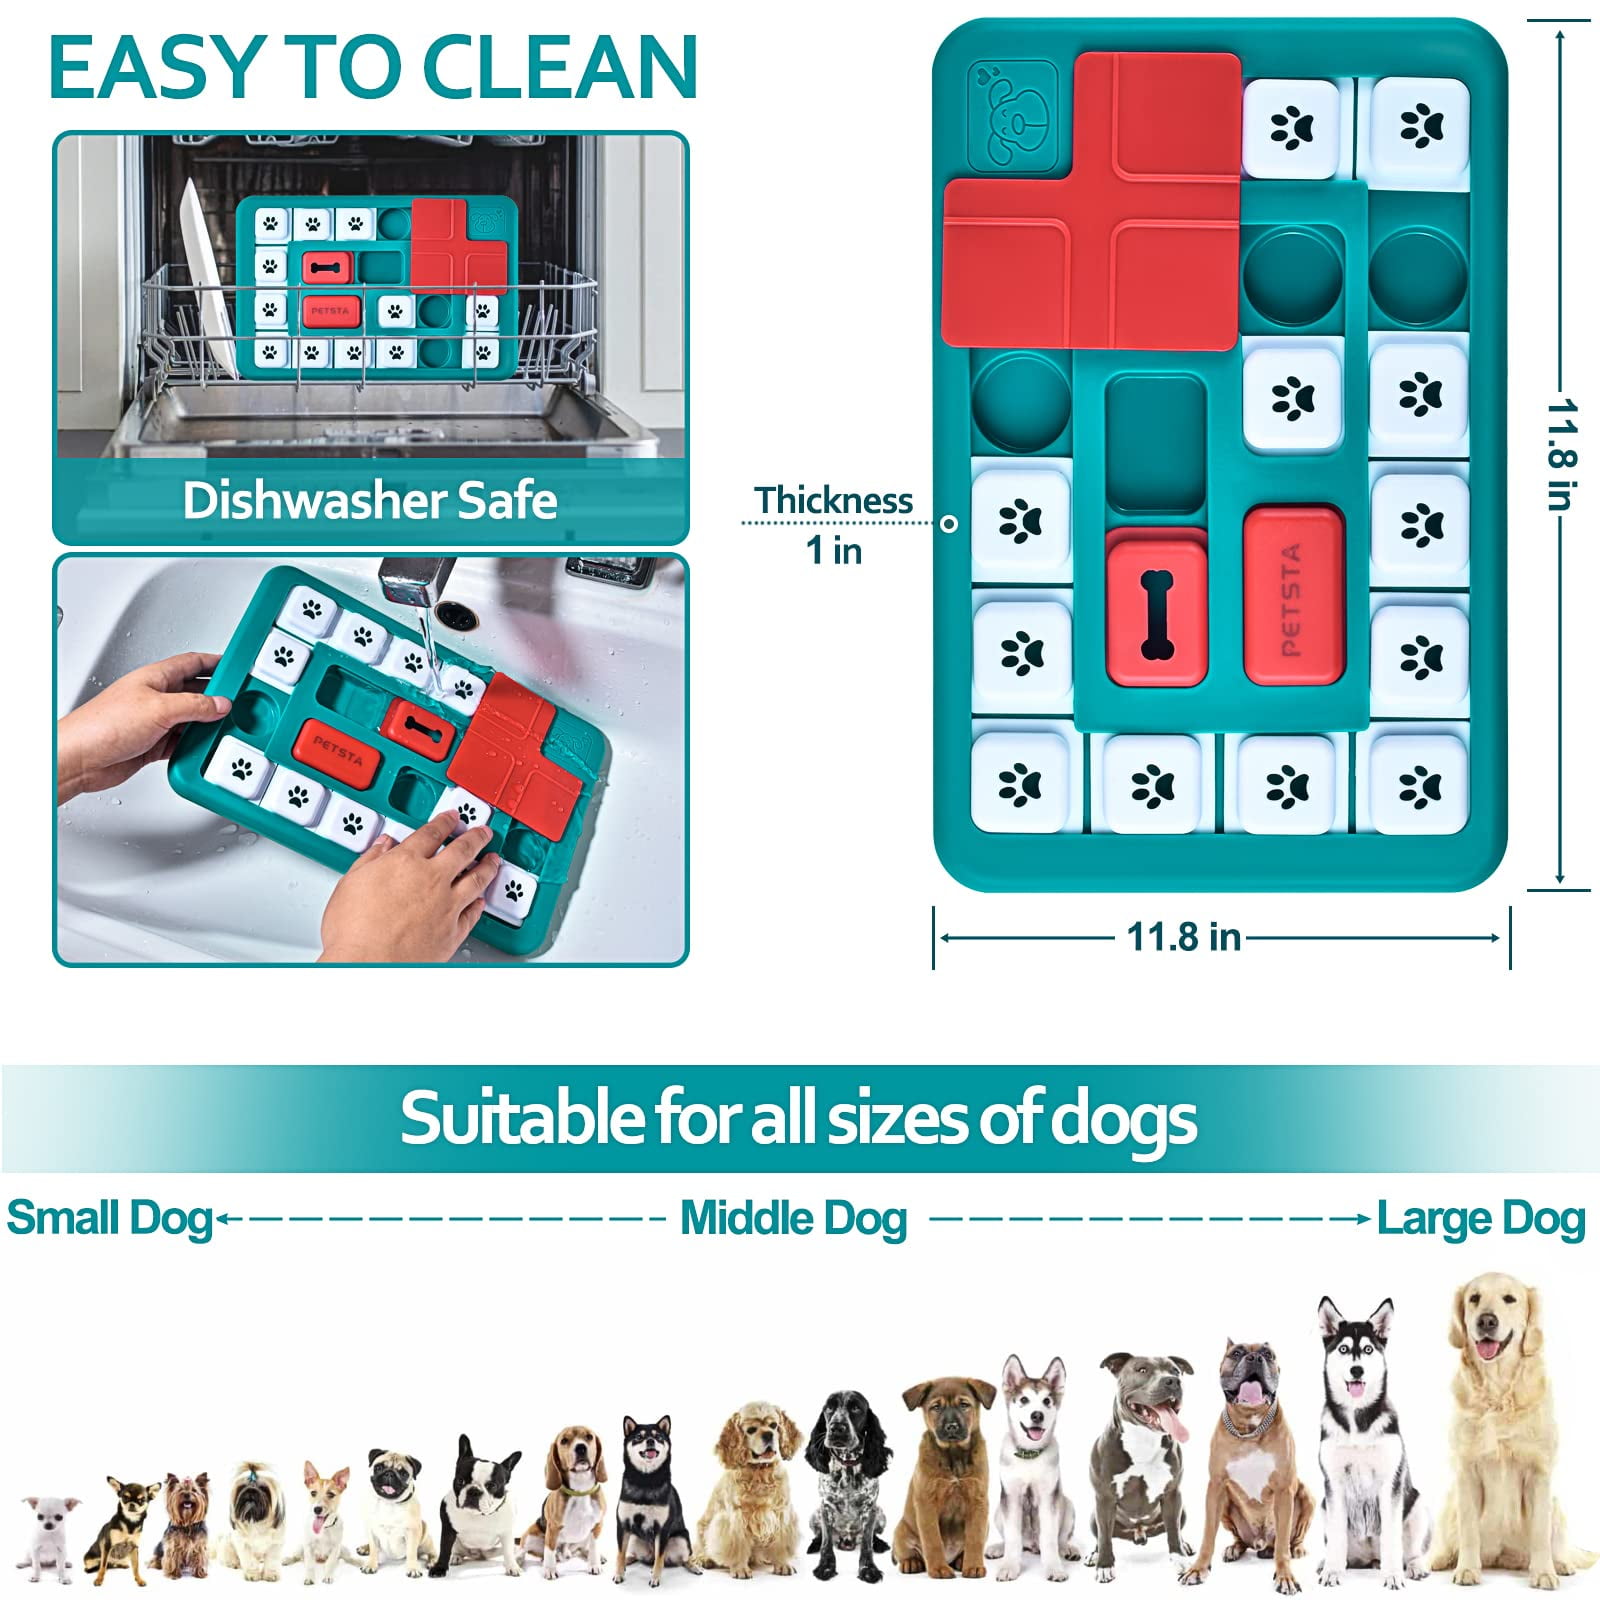 xigou dog puzzle toys, interactive dog toys for large medium small smart  dogs, dog enrichment toys